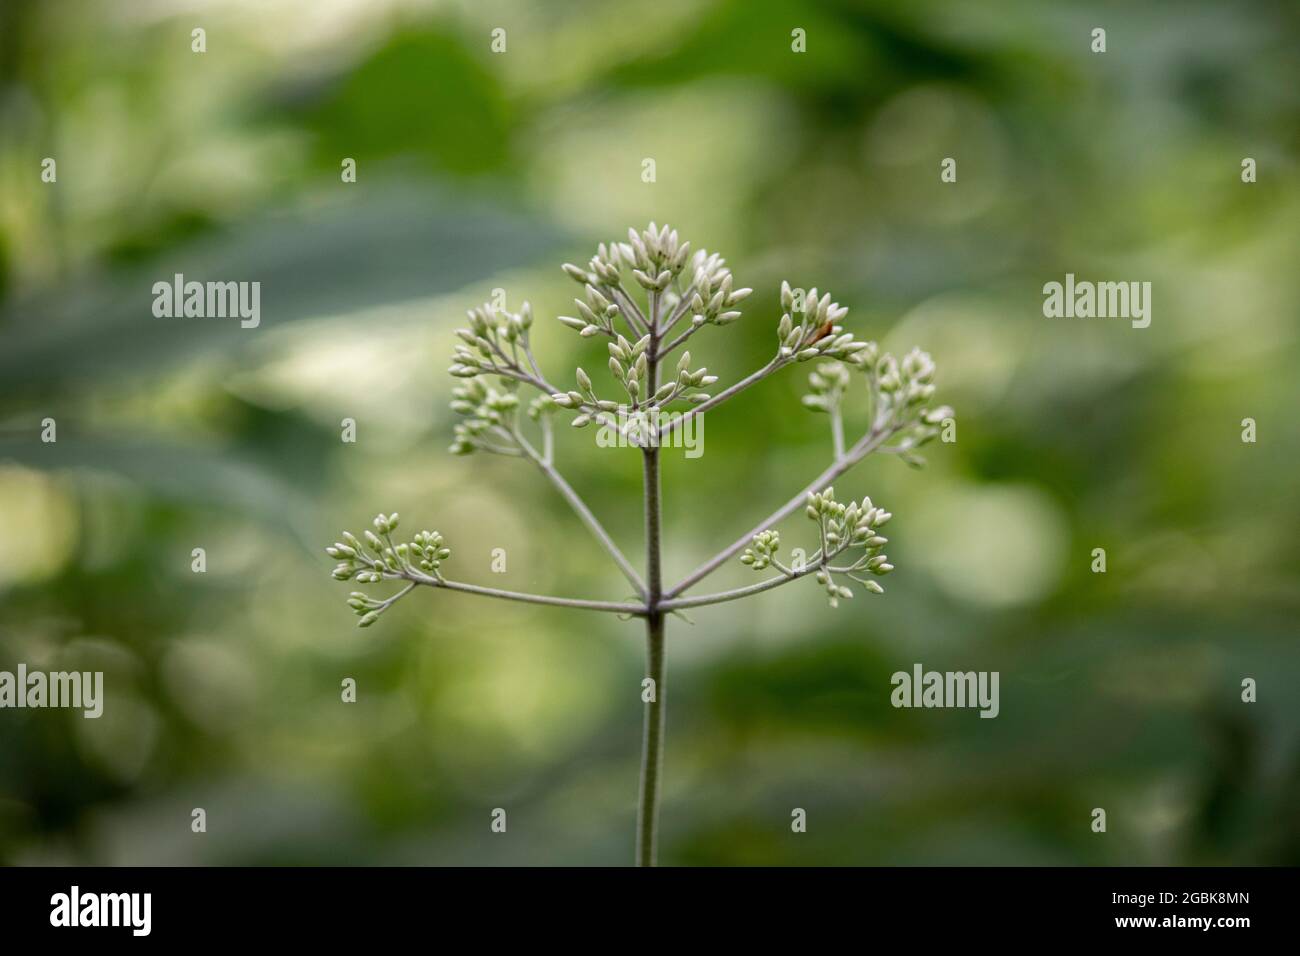 Eine blühende Kuh-Parsnip-Pflanze Stockfotografie - Alamy